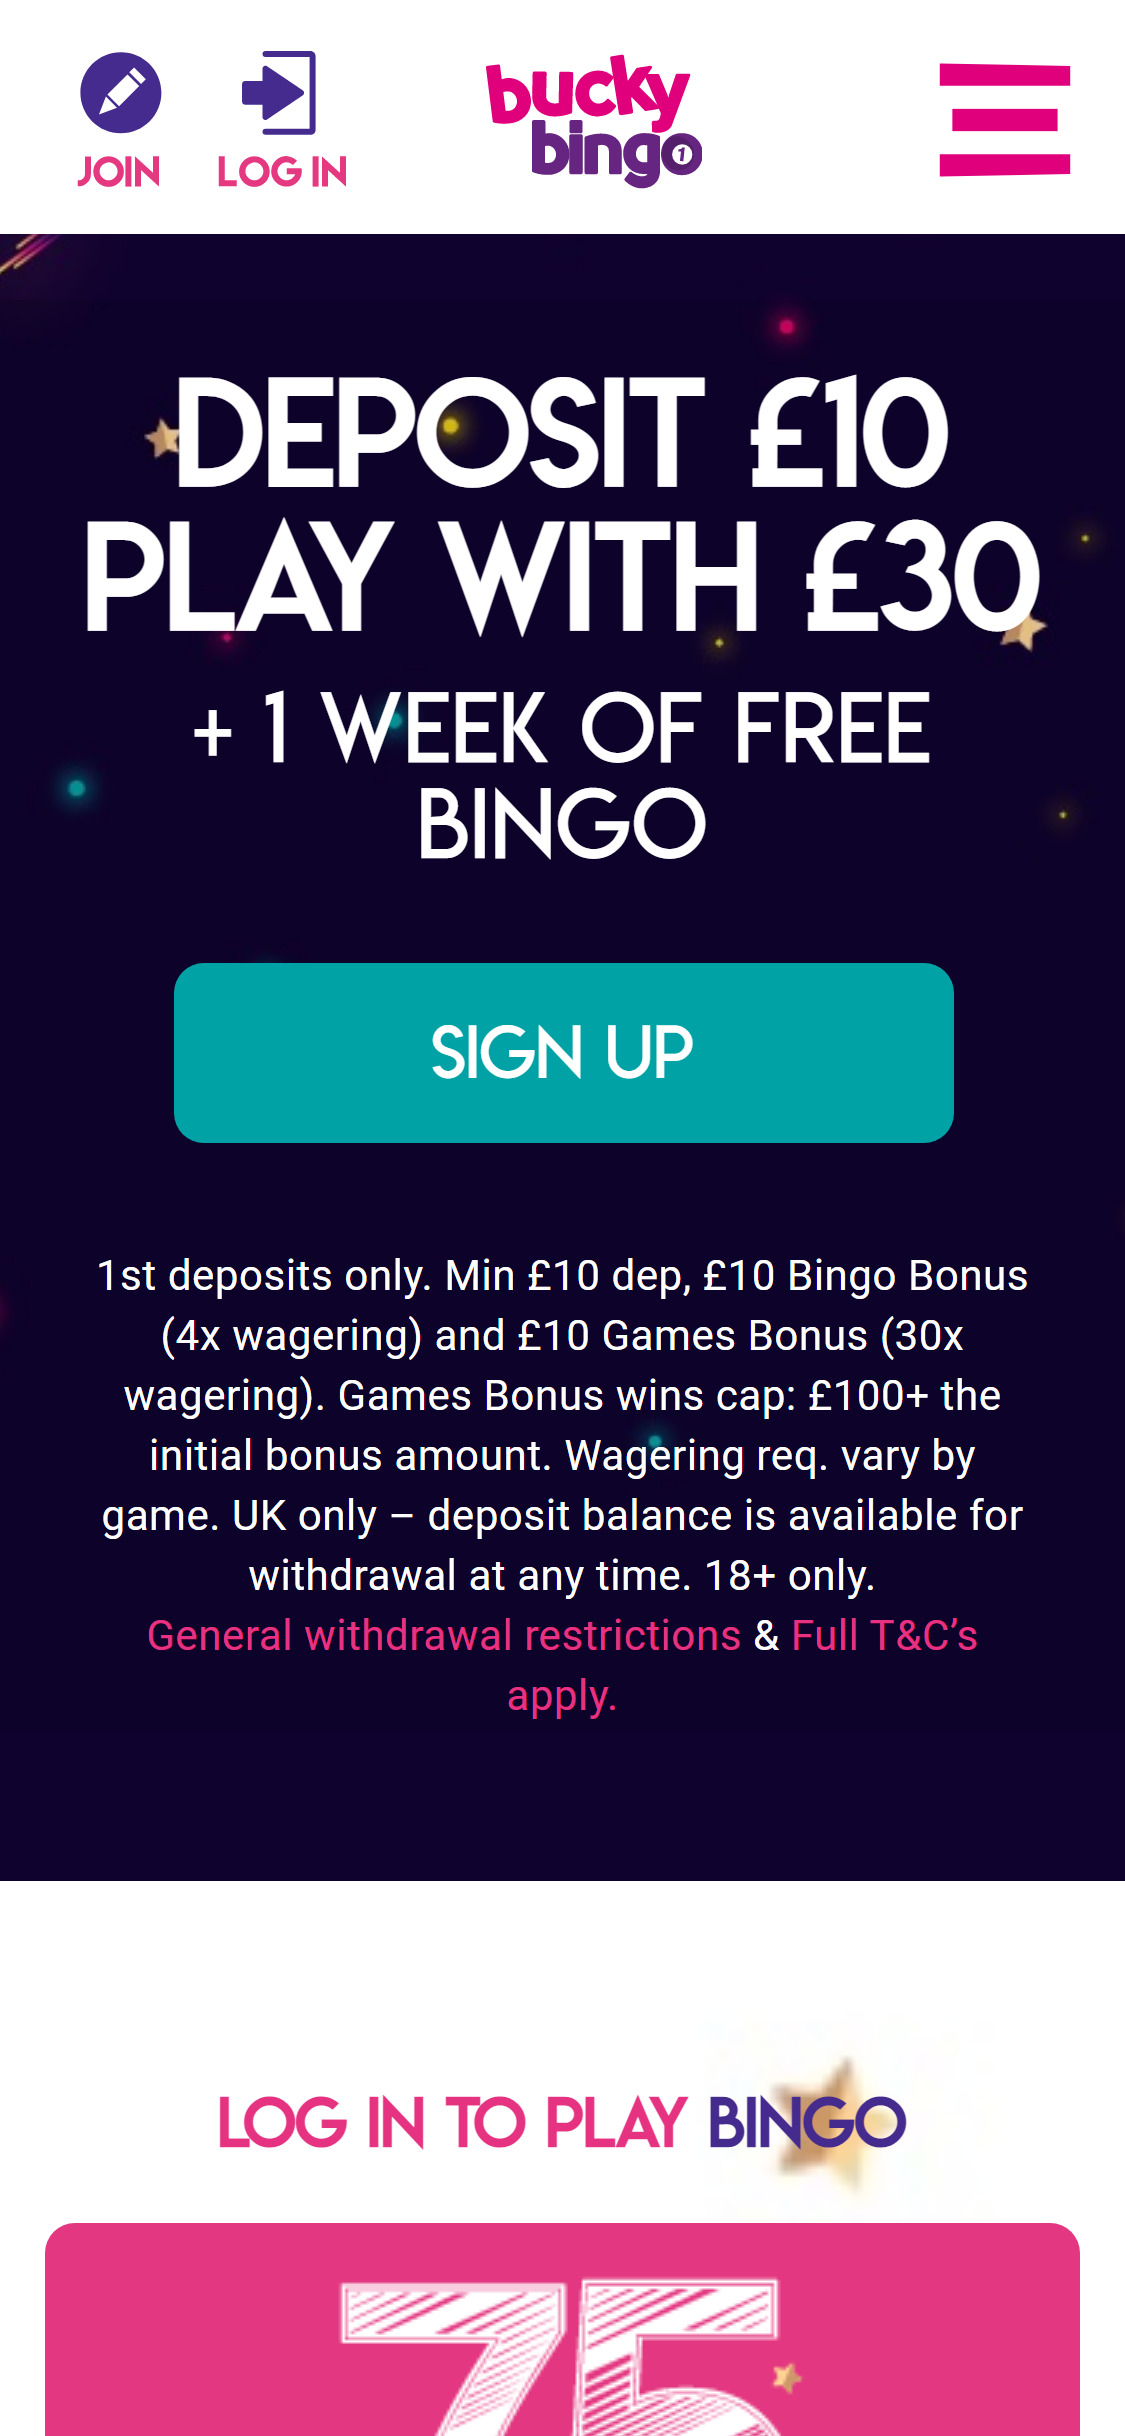 Bucky Bingo Casino Mobile Review